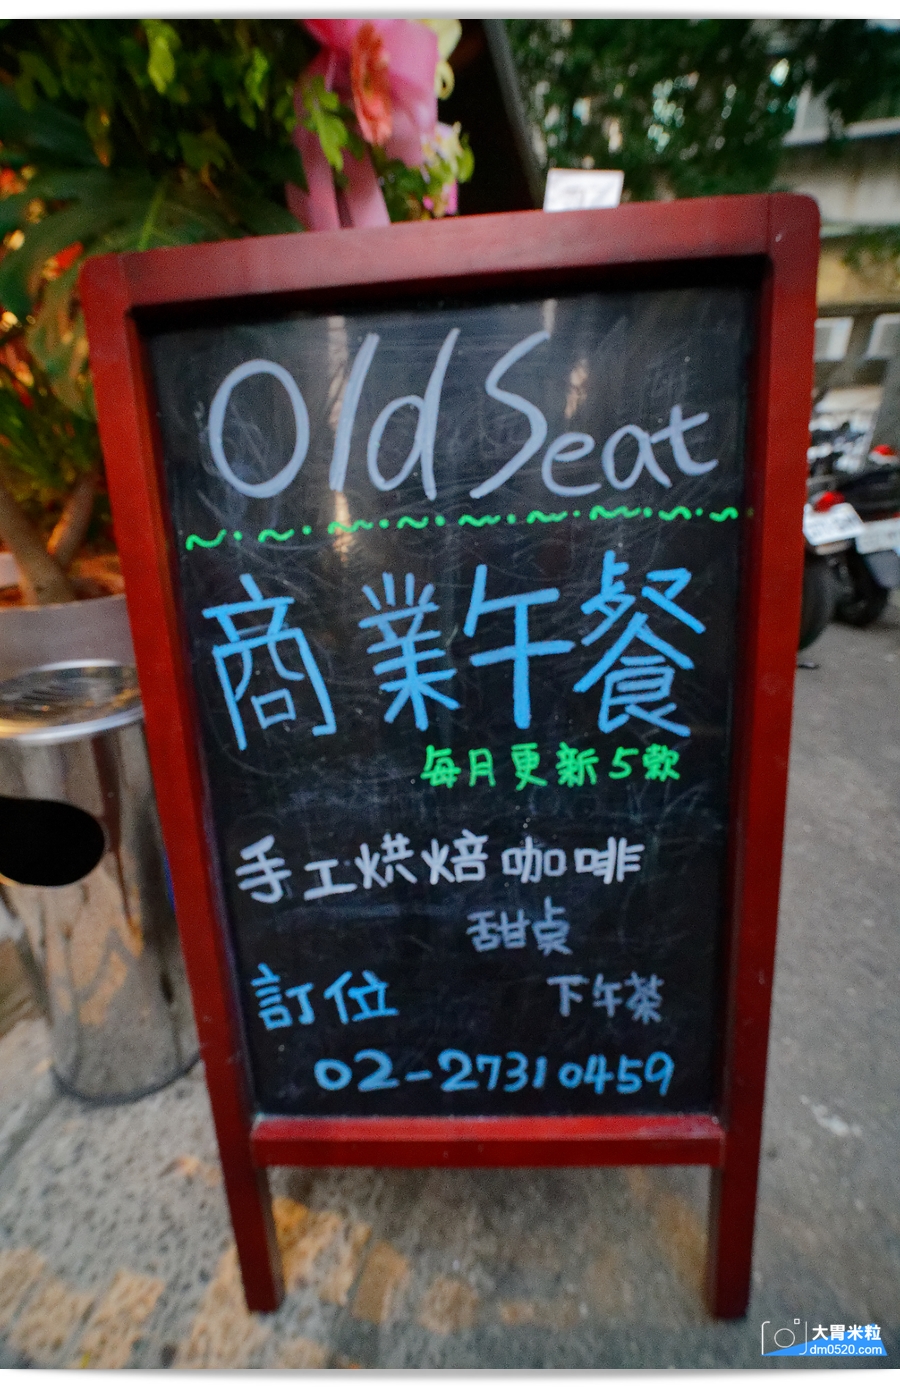 Old Seat Restaurant.Cafe 川酒&咖啡